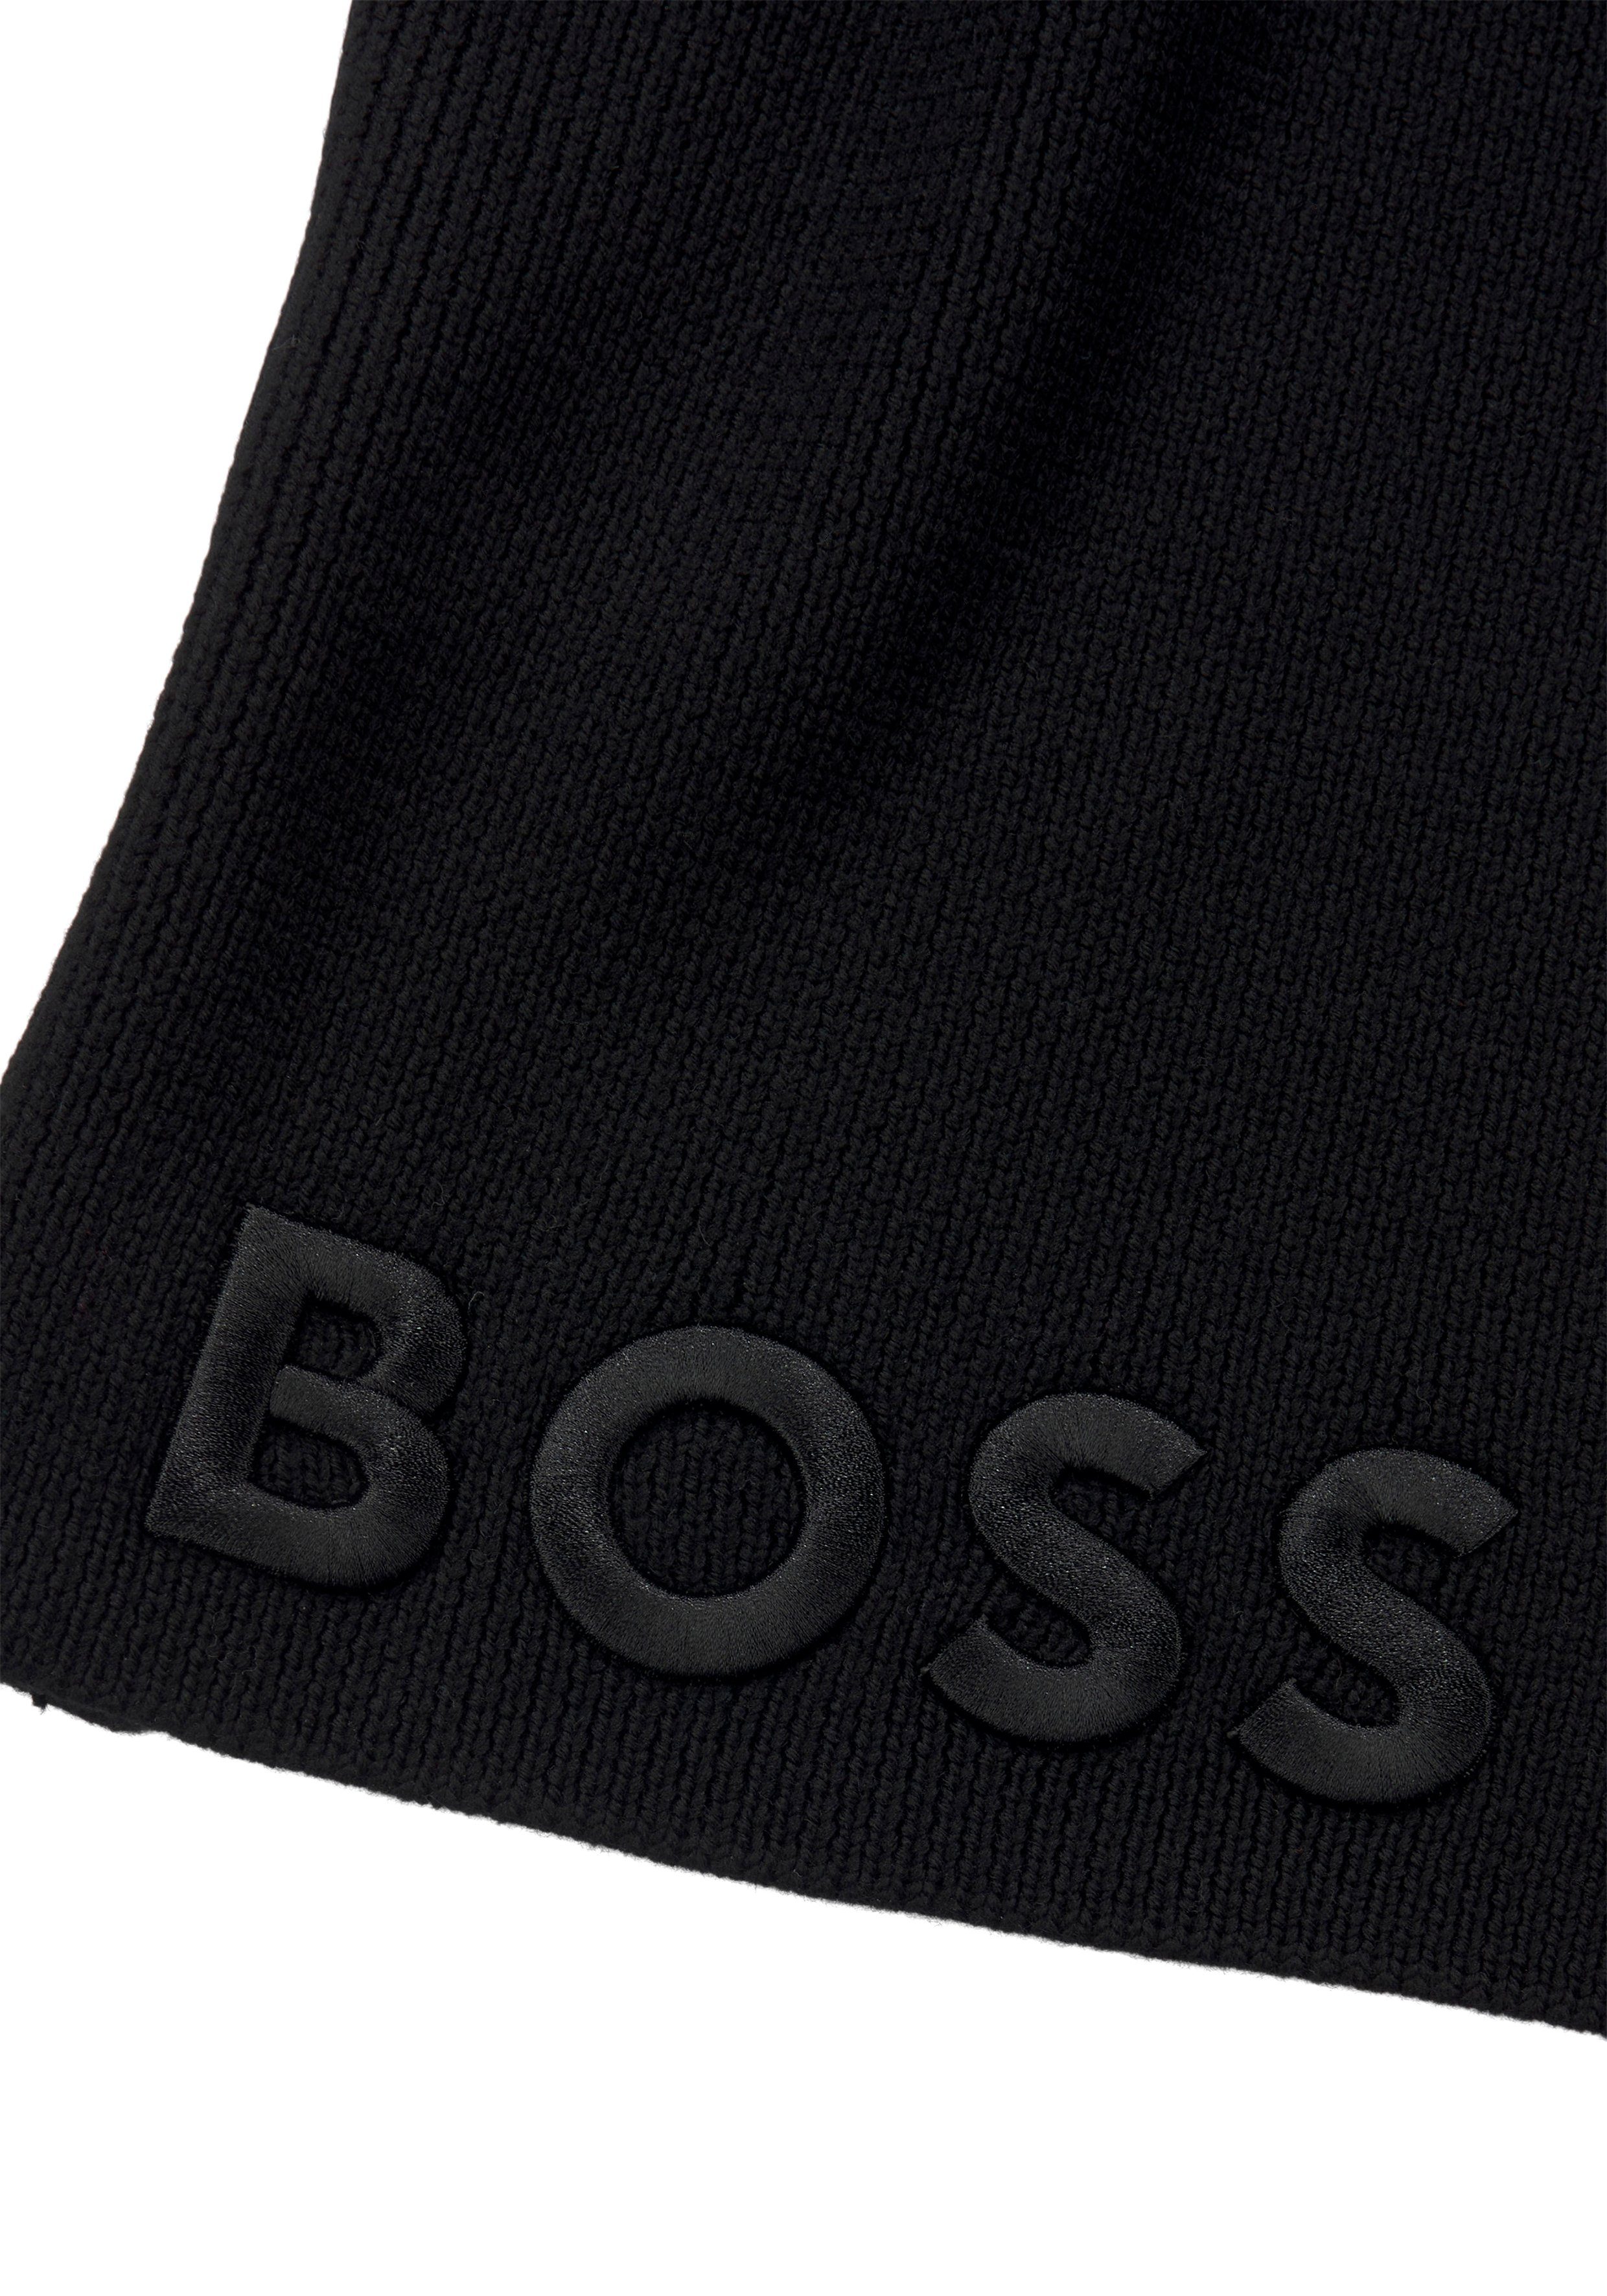 BOSS tonaler Black BOSS Lara_scarf, mit Schal Logo-Stickerei